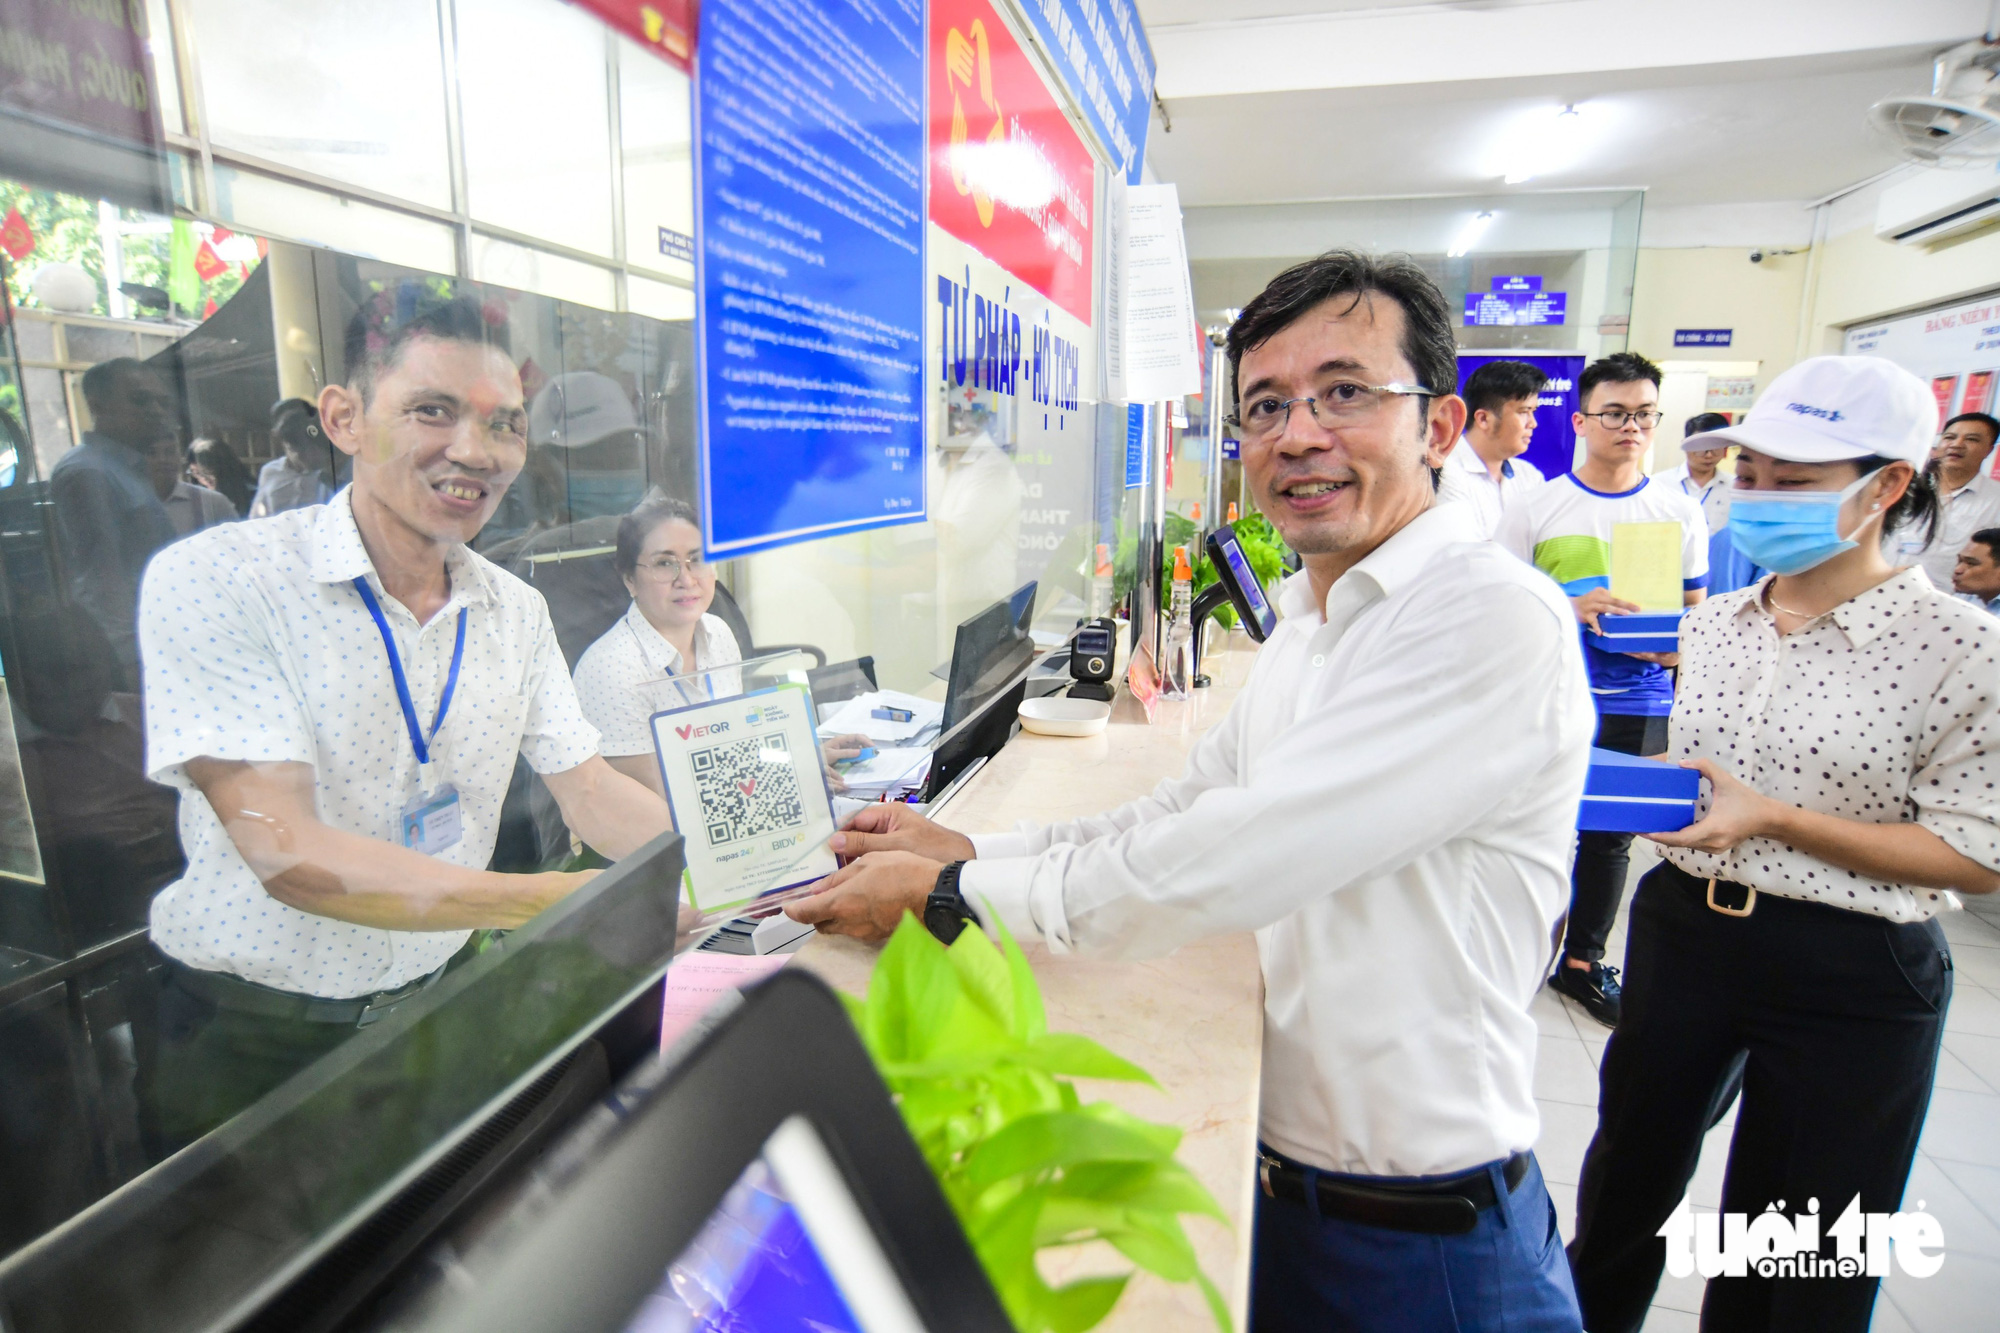 Ho Chi Minh City dwellers eager for non-cash public services